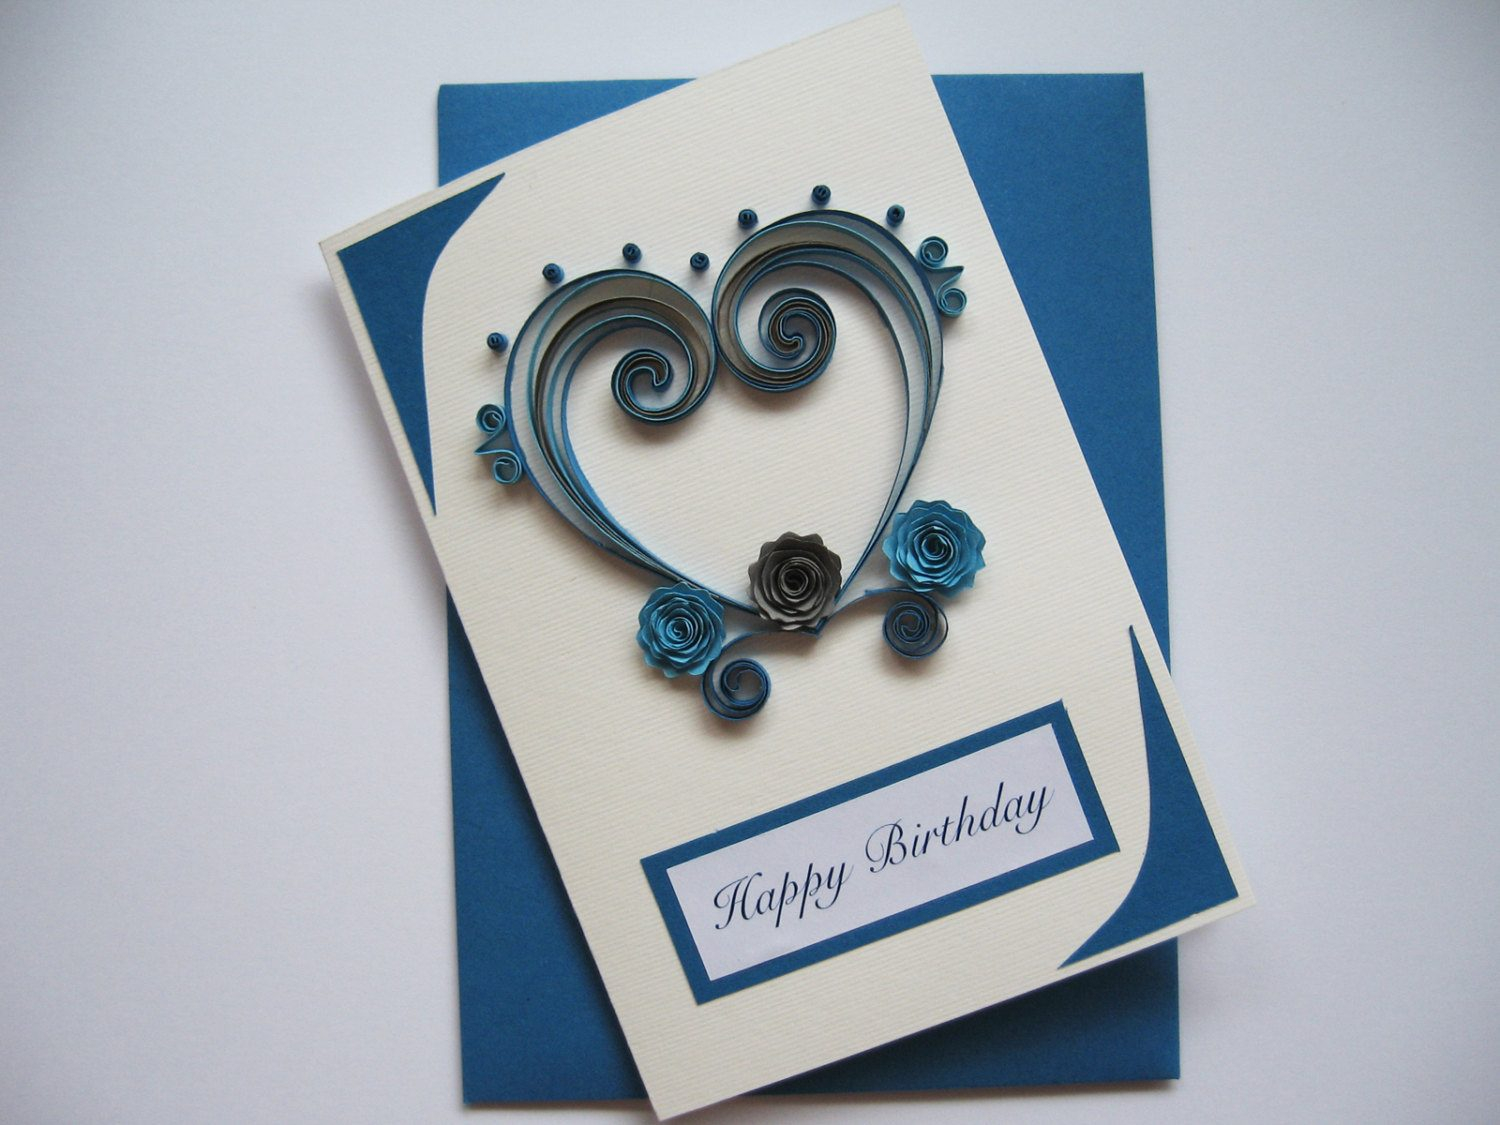 Handmade Birthday Card Ideas For Boyfriend 99 Birthday Cards Designs For Boyfriend Simple Birthday Cards